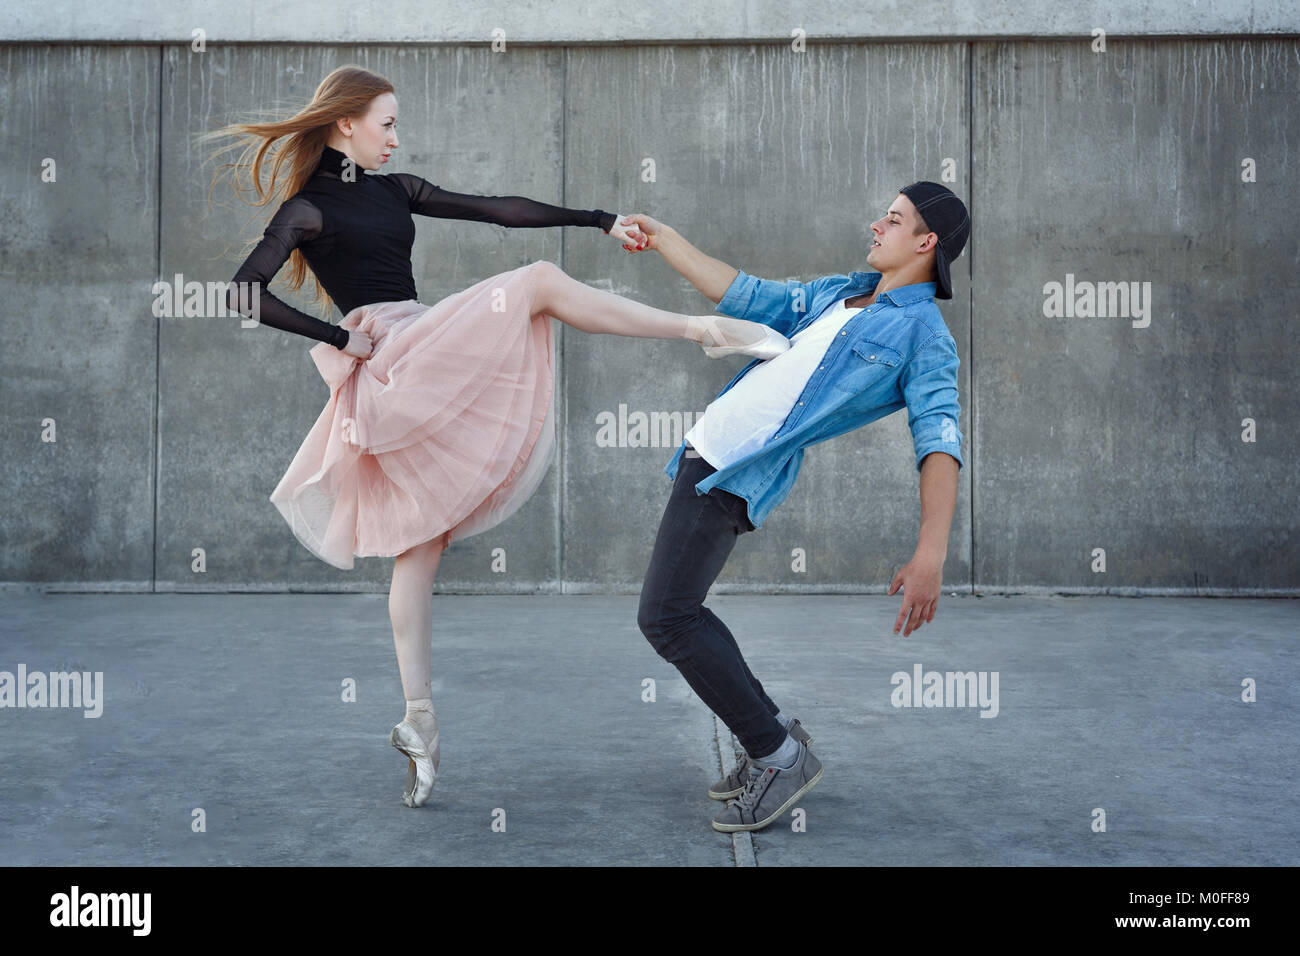 Bailes modernos fotografías e imágenes de alta resolución - Página 10 -  Alamy